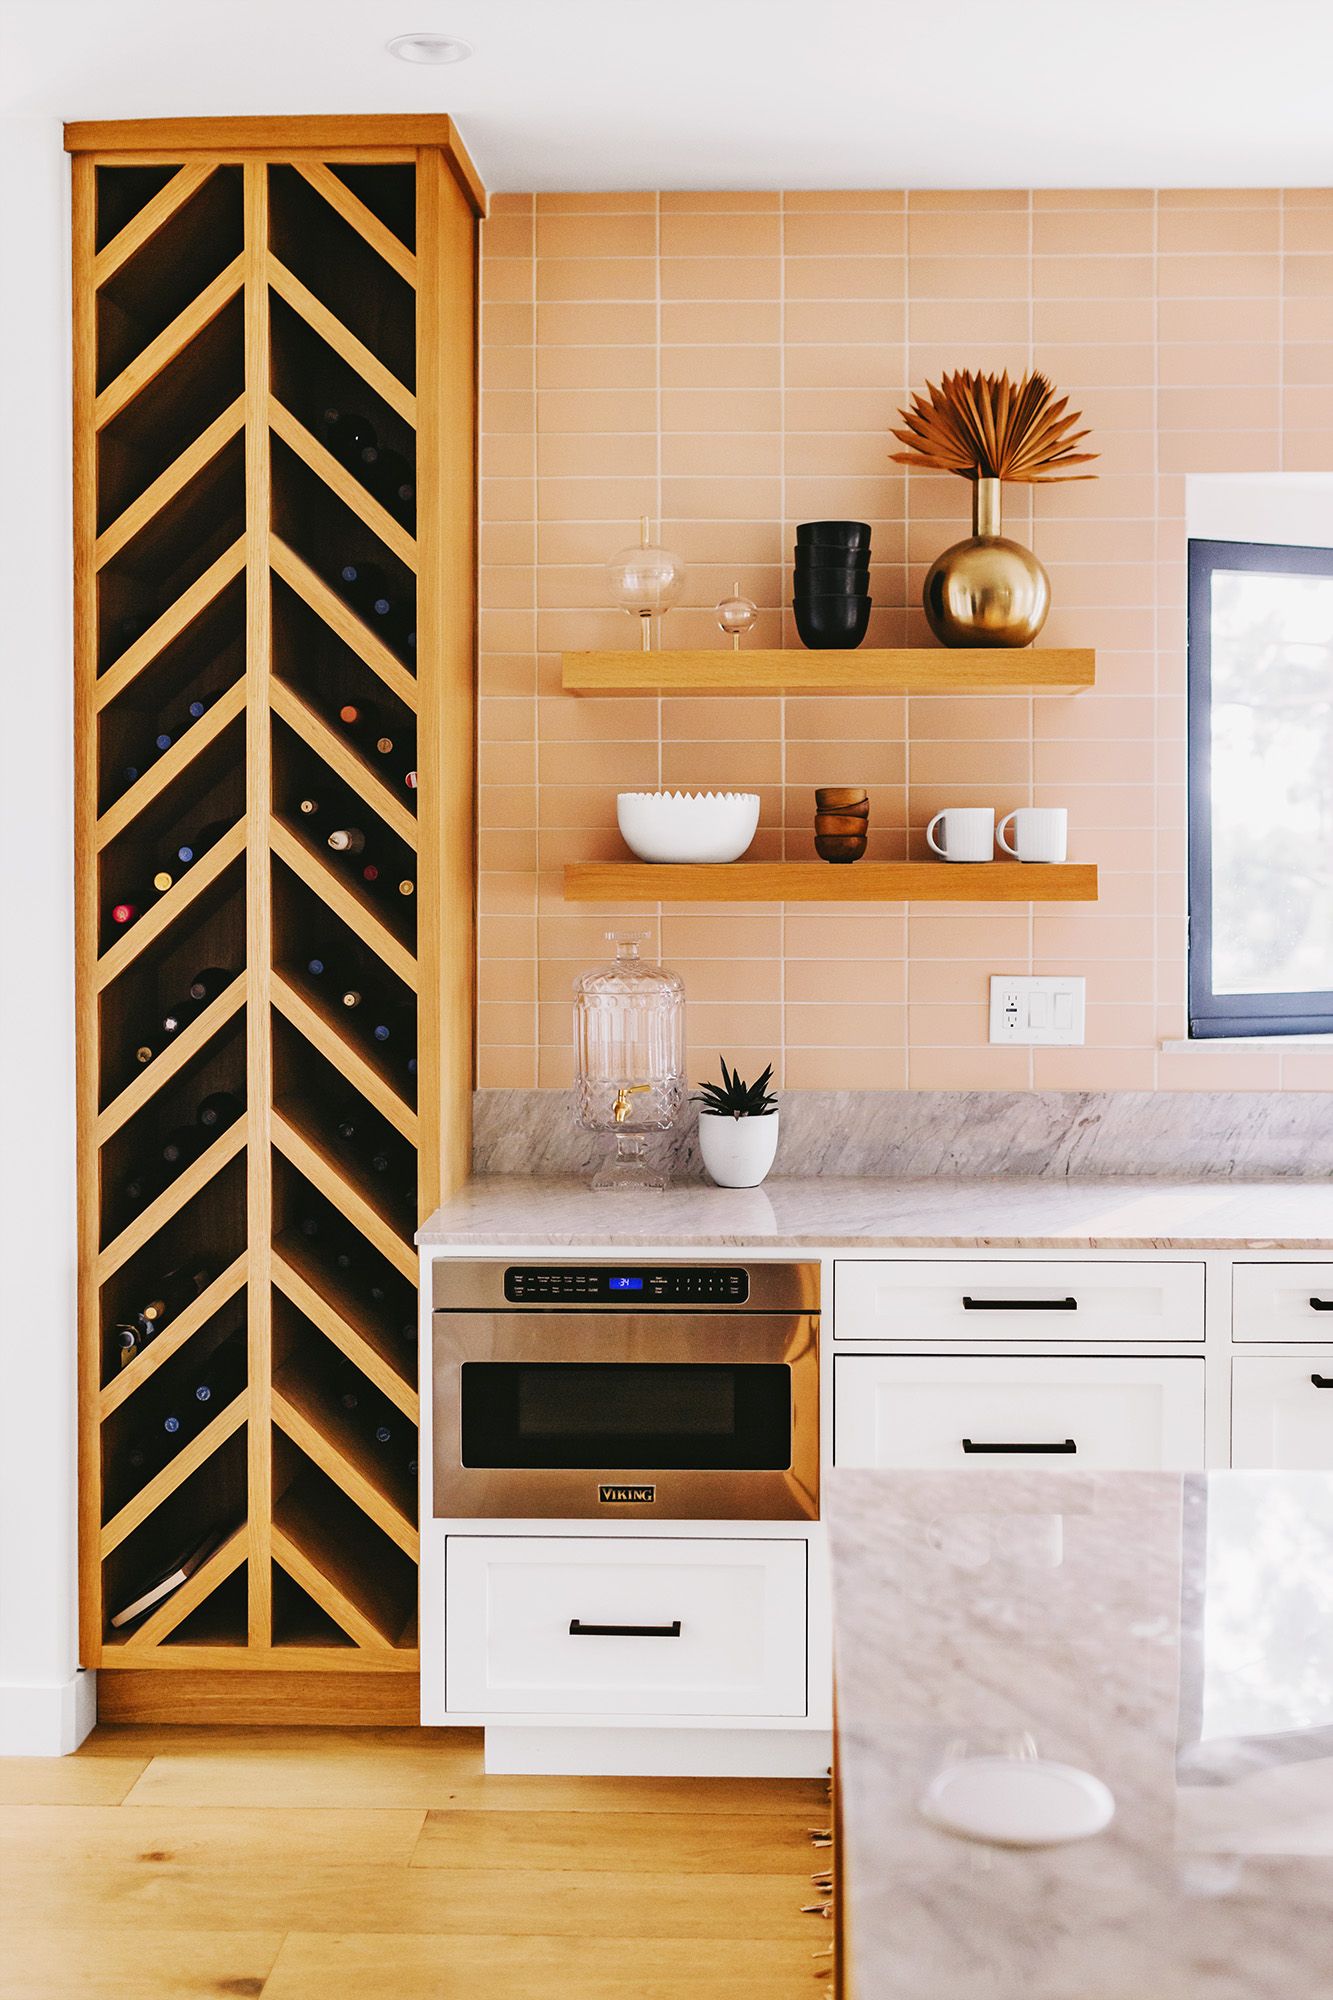 20 Best Small Kitchen Design Ideas   Small Kitchens Photo Gallery